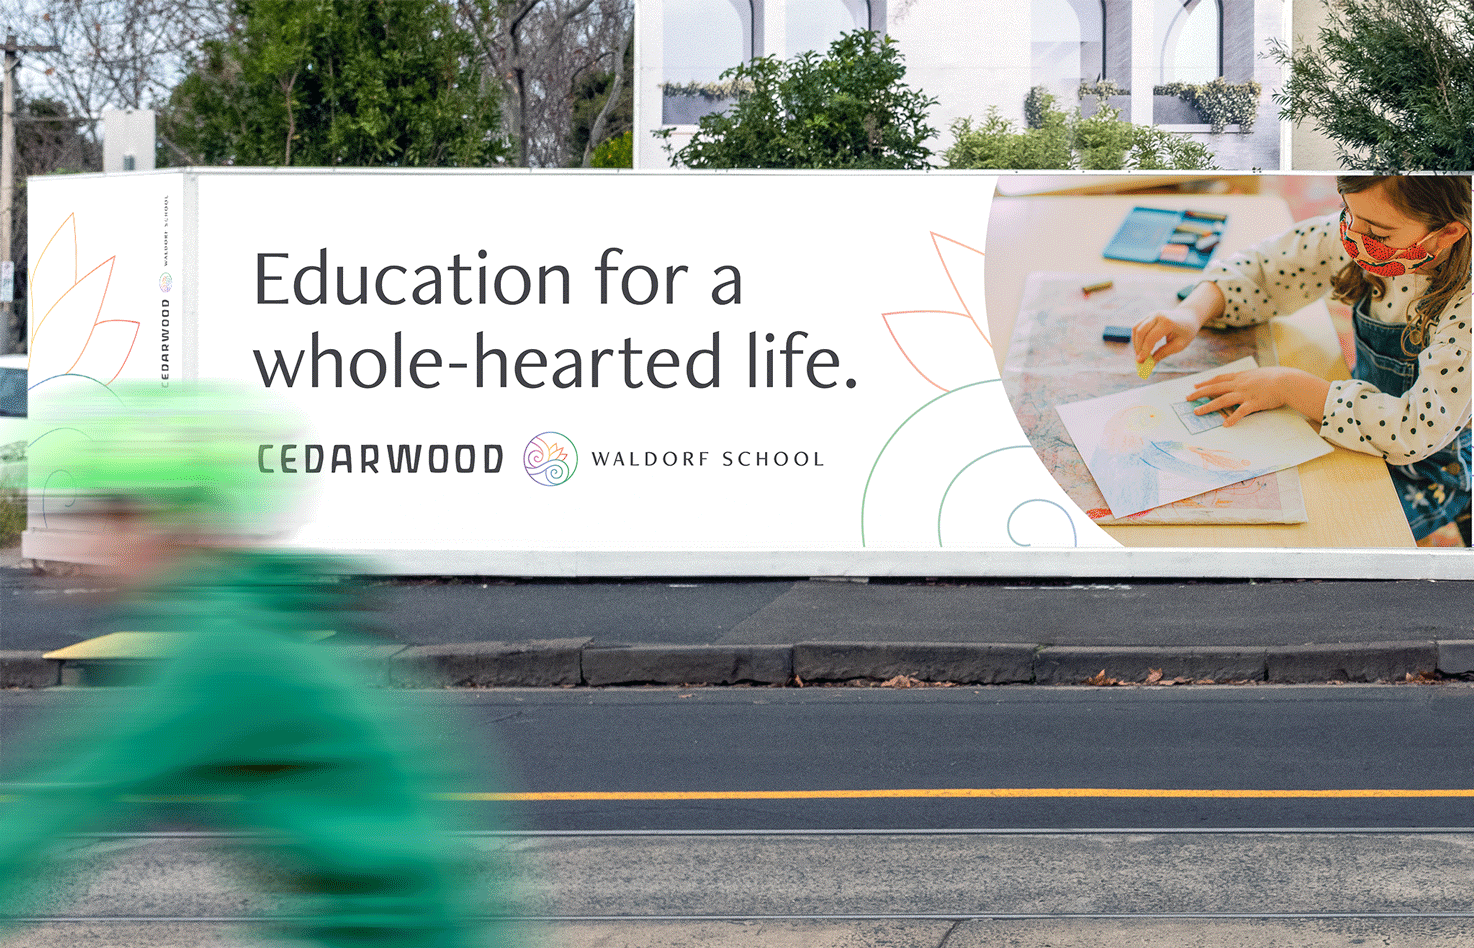 Cedarwood-Waldorf-School-education-marketing-advertising-branding.png